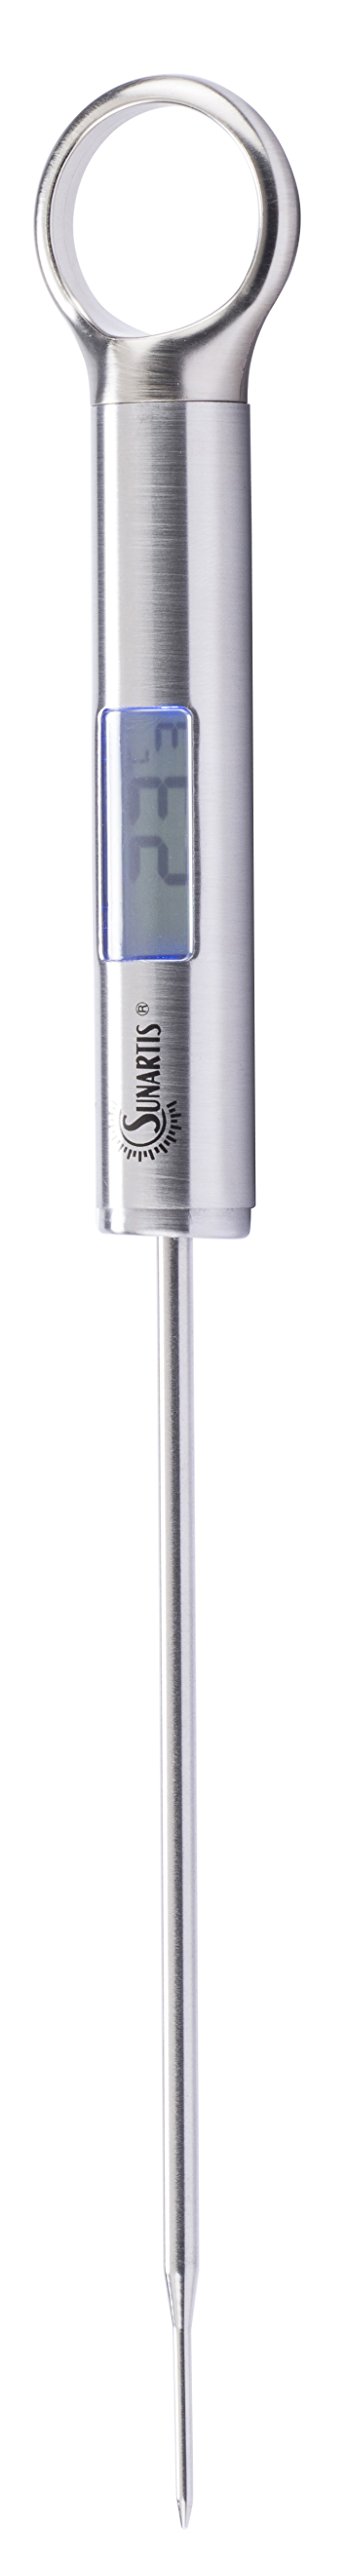 Sunartis Thermometer, Edelstahl, 23.5 x 3 x 1.5 cm